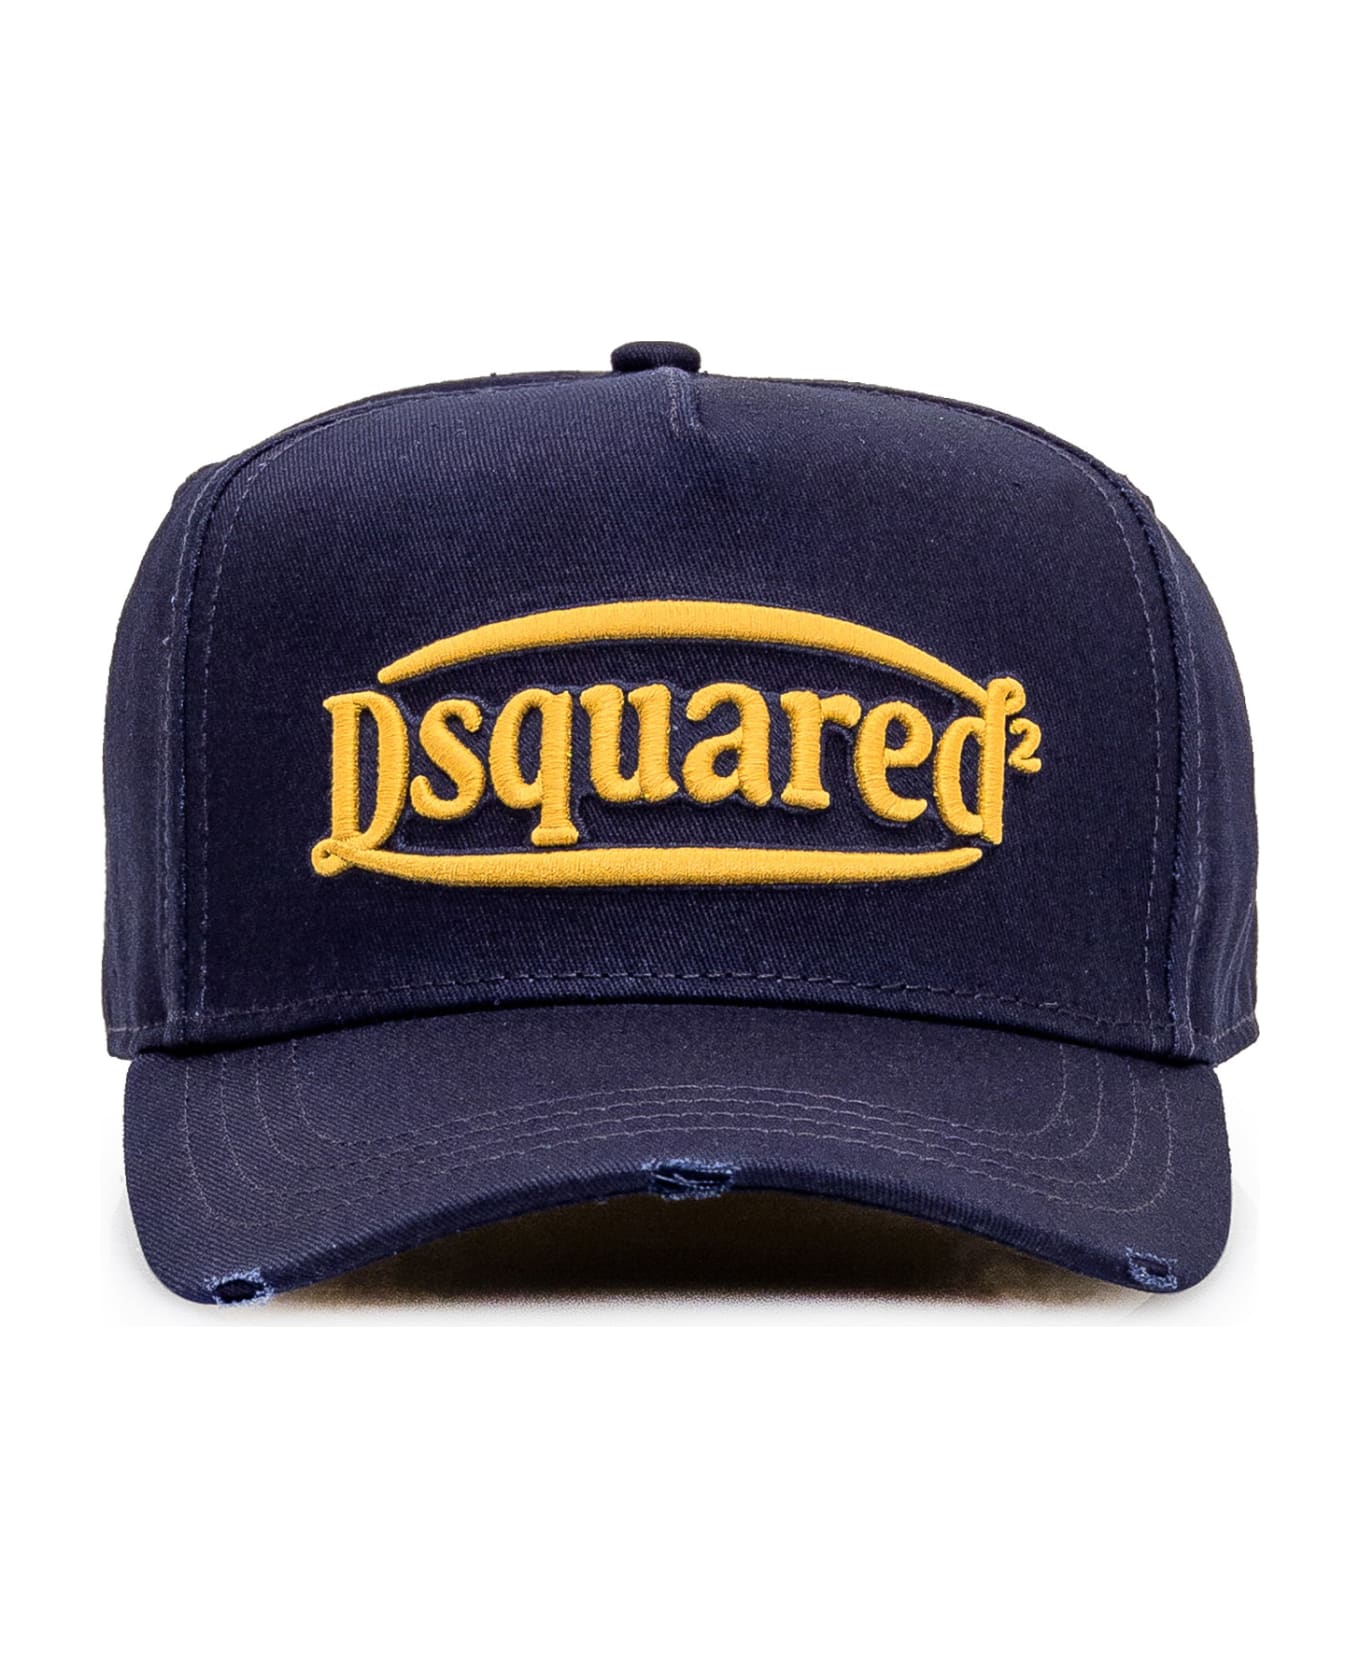 Dsquared2 Logo Embroidered Baseball Cap - NAVY+GIALLO